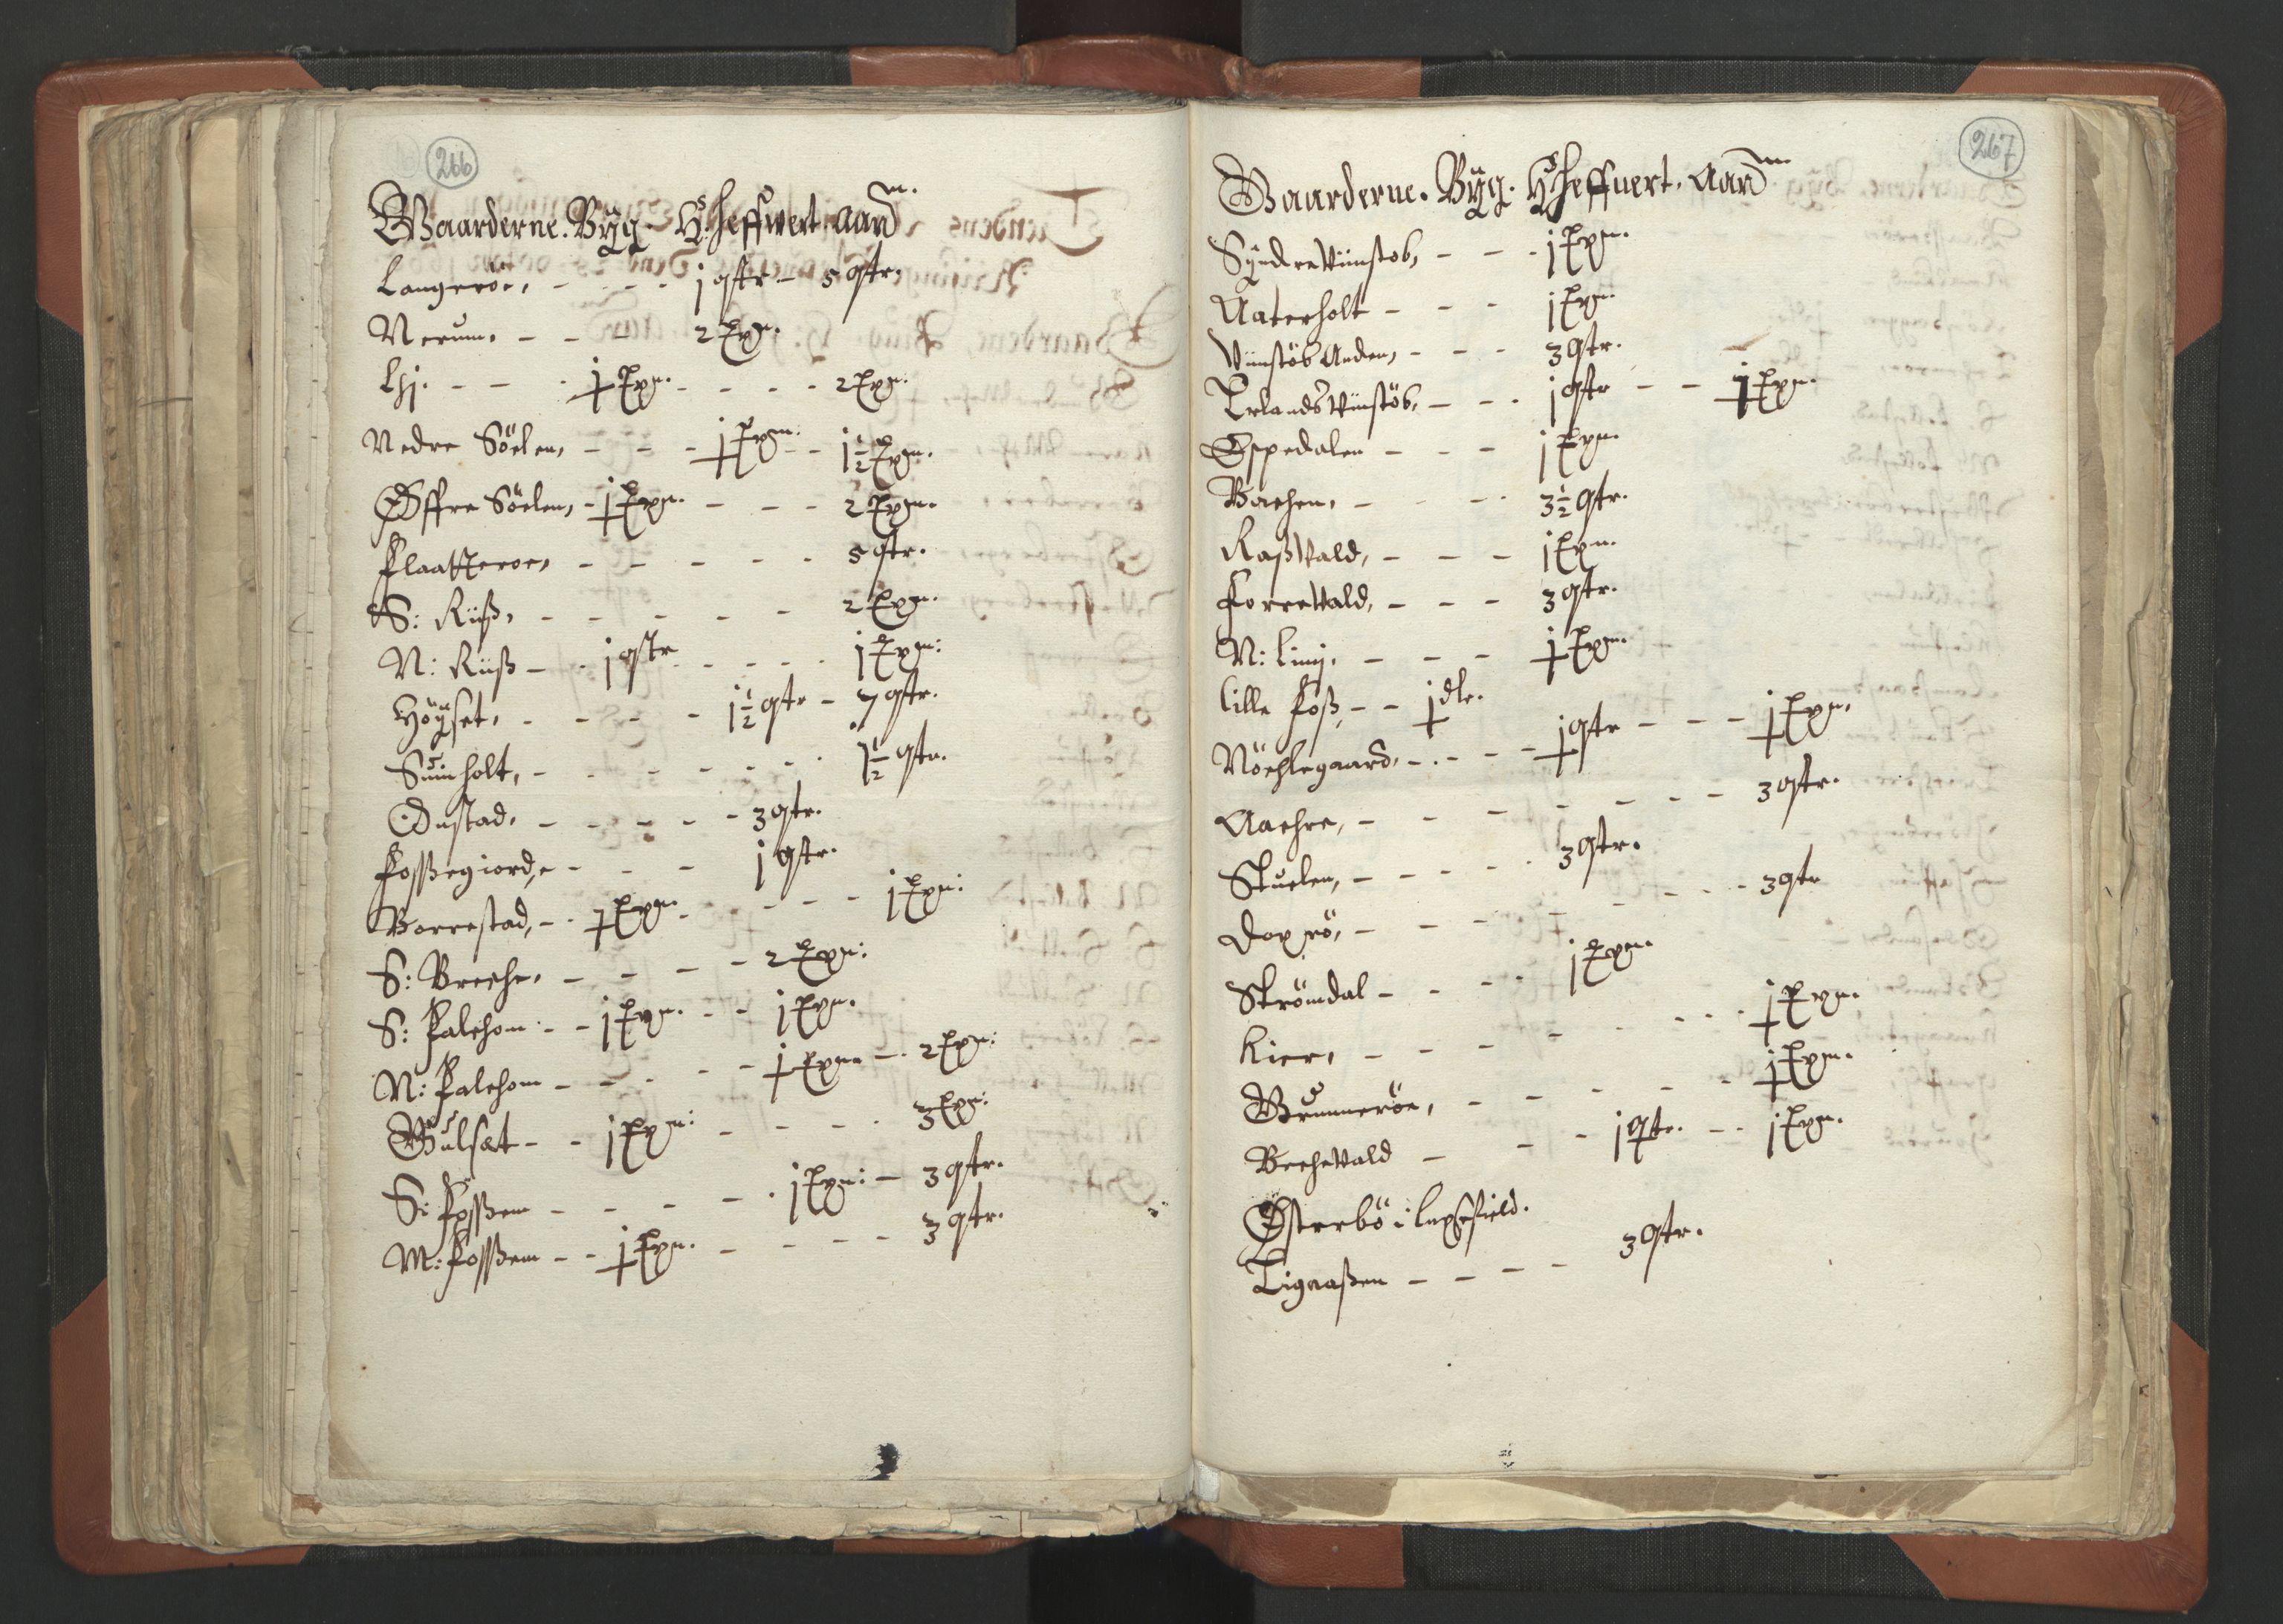 RA, Vicar's Census 1664-1666, no. 12: Øvre Telemark deanery, Nedre Telemark deanery and Bamble deanery, 1664-1666, p. 266-267